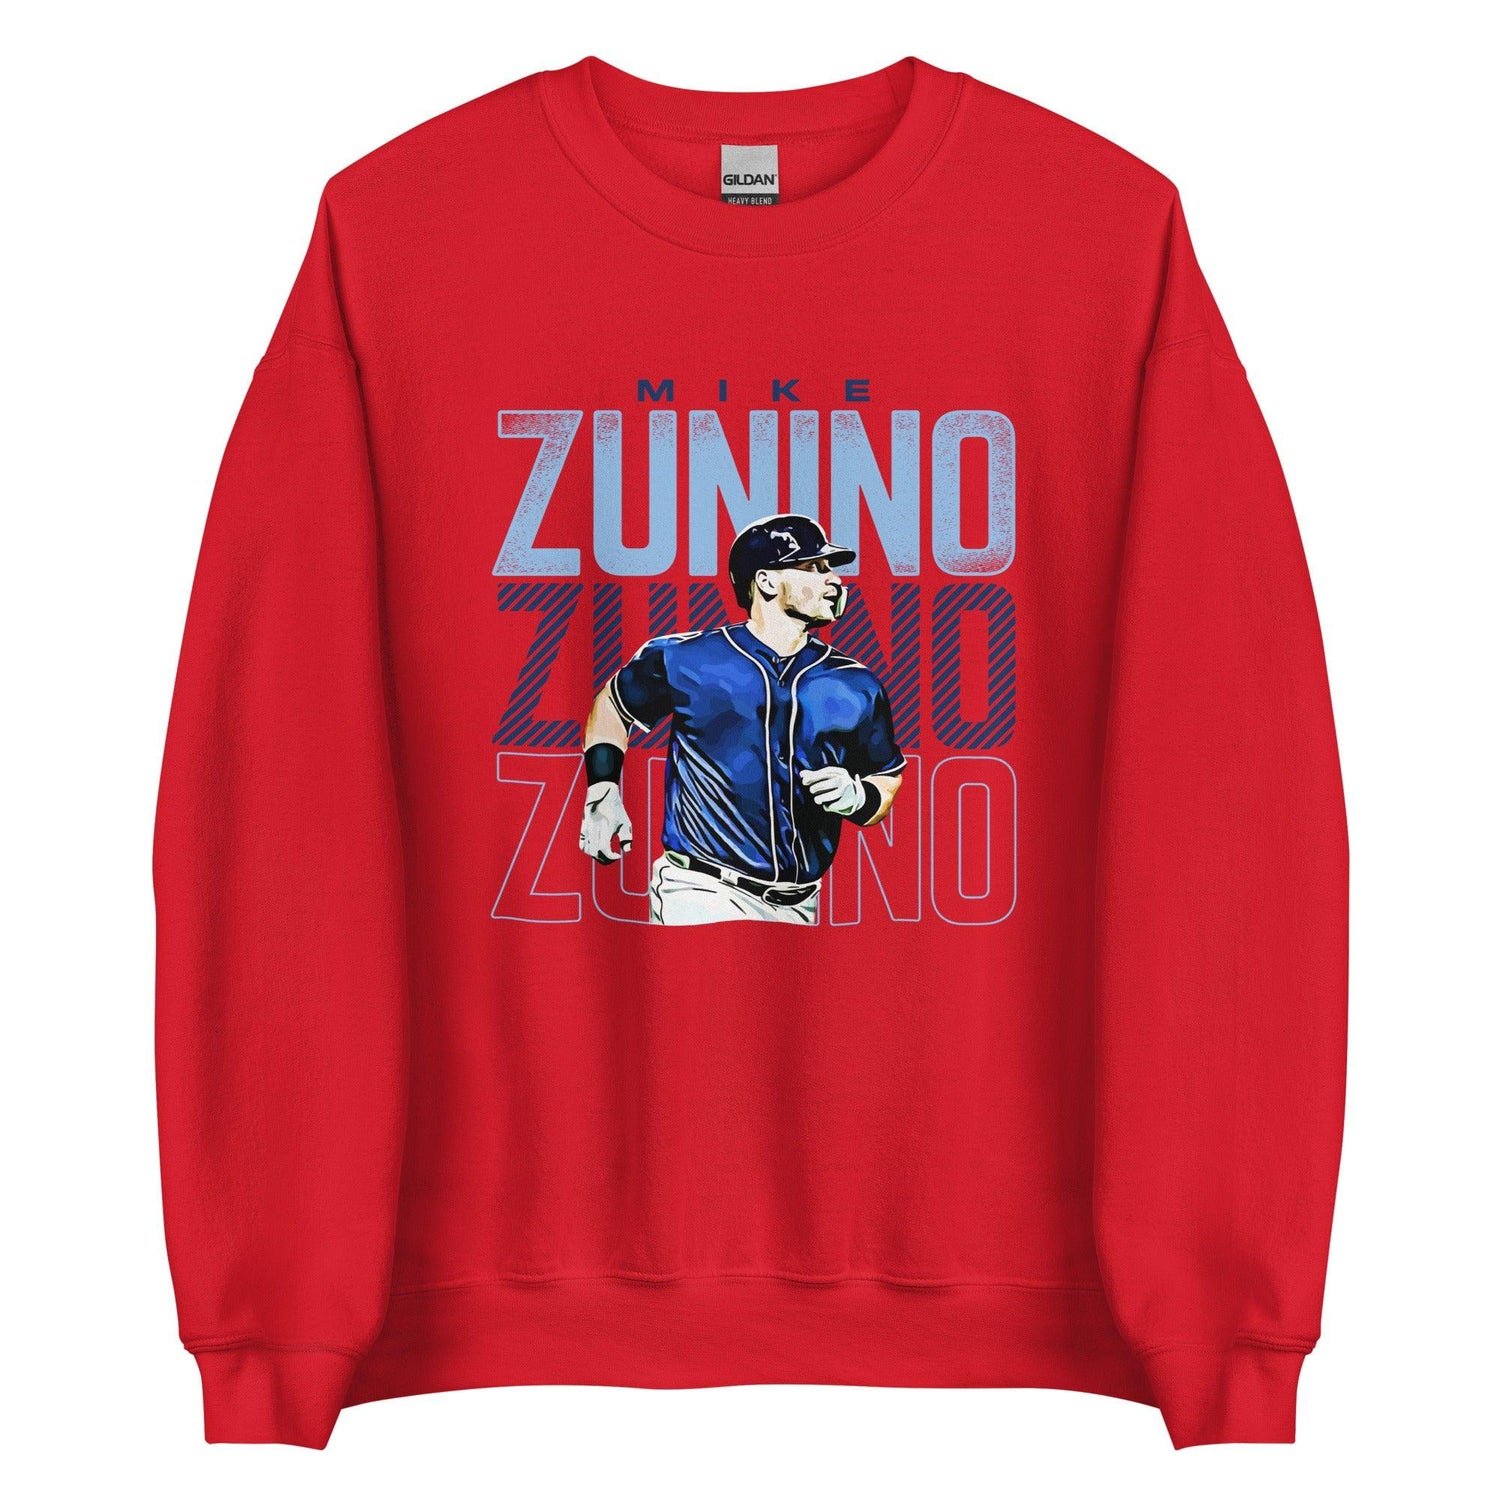 Mike Zunino "Walk Off" Sweatshirt - Fan Arch